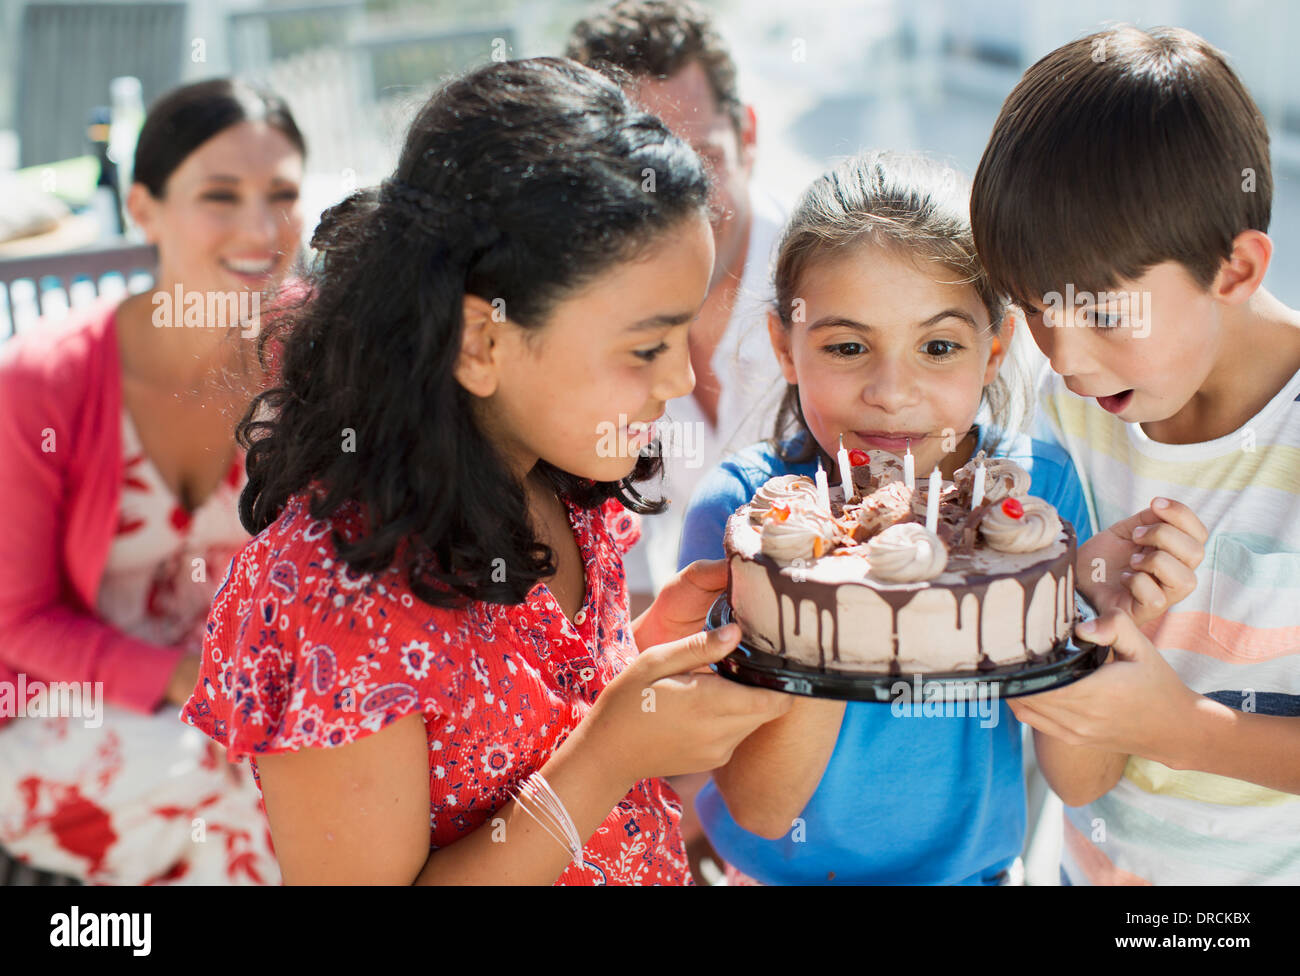 Children holding birthday cake outdoors Stock Photo